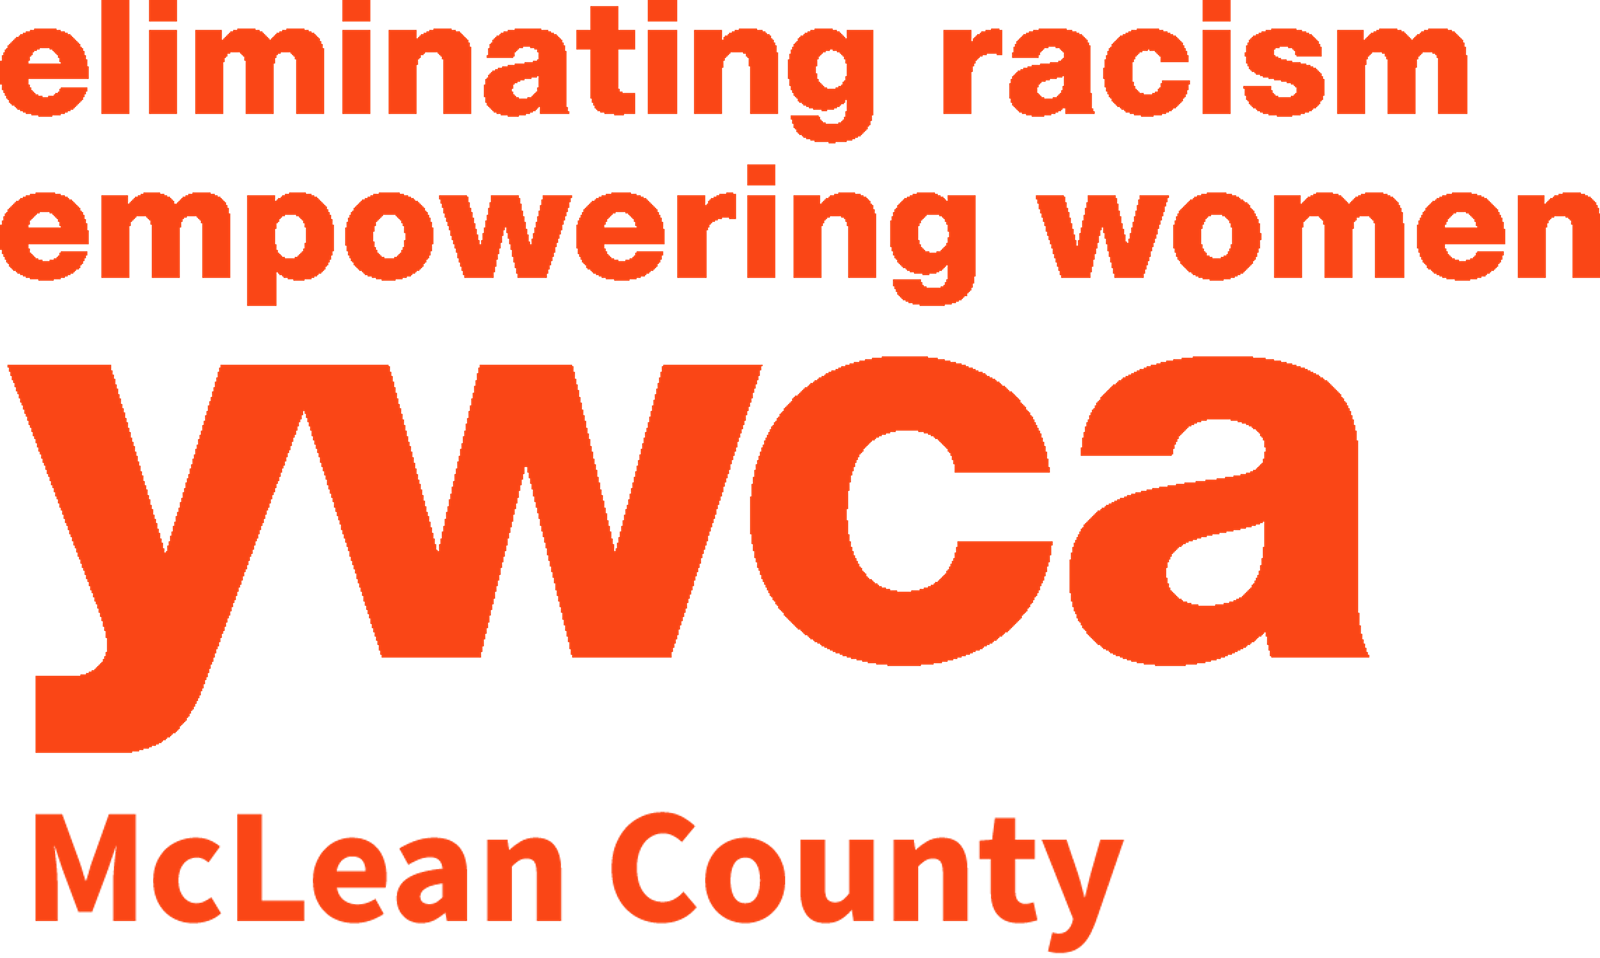 YWCA McClean County